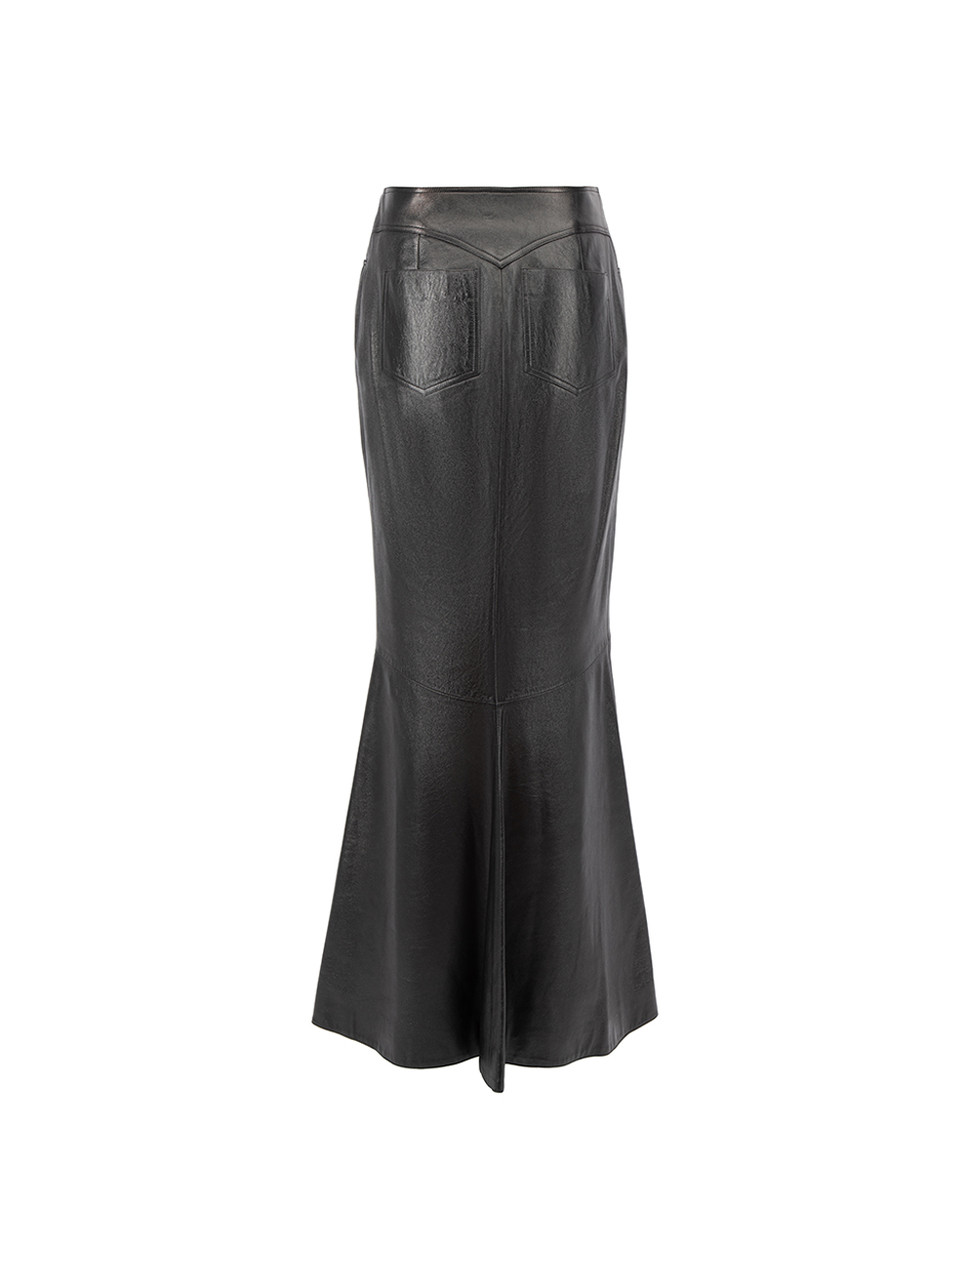 Chanel Vintage Black Leather Straight Skirt